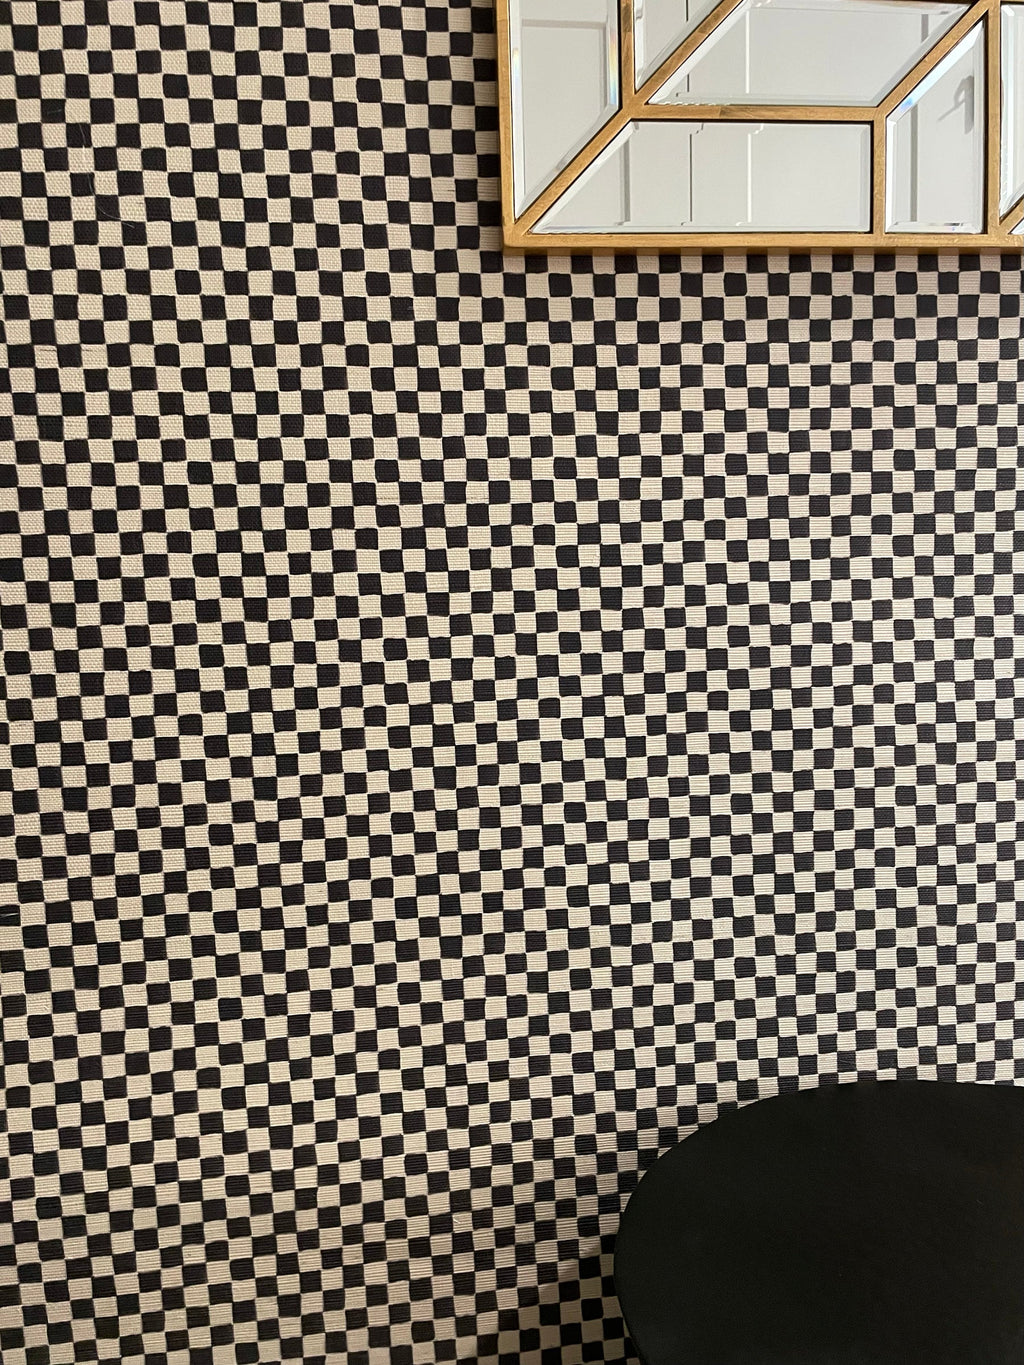 Poppy Print Studio Checker Straw Wallpaper